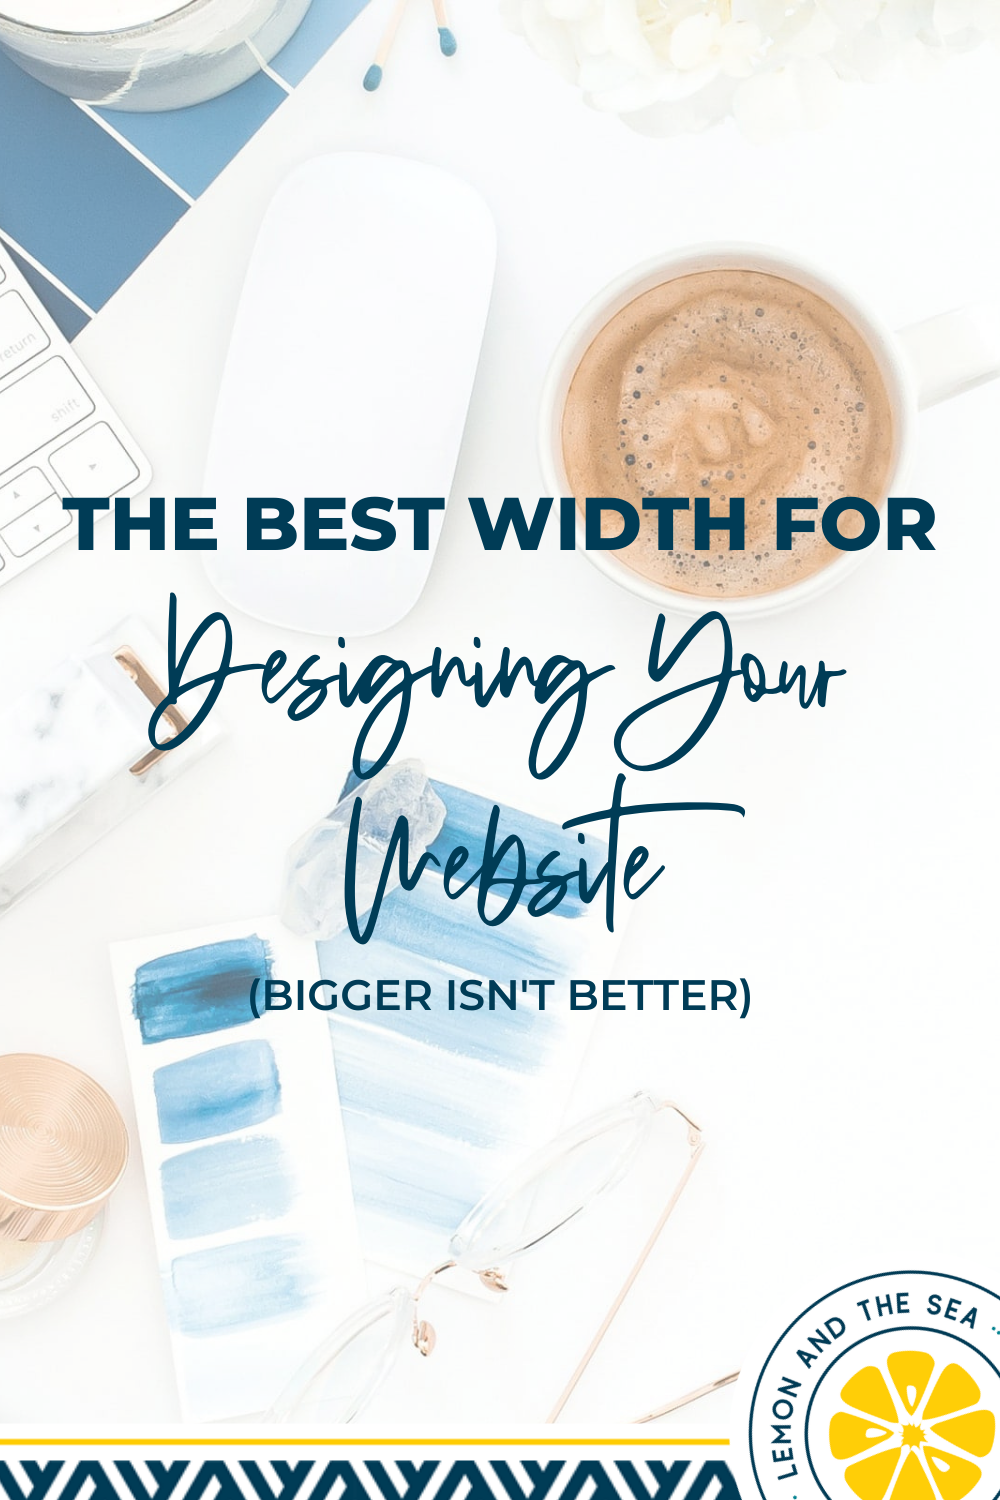 calgary web design